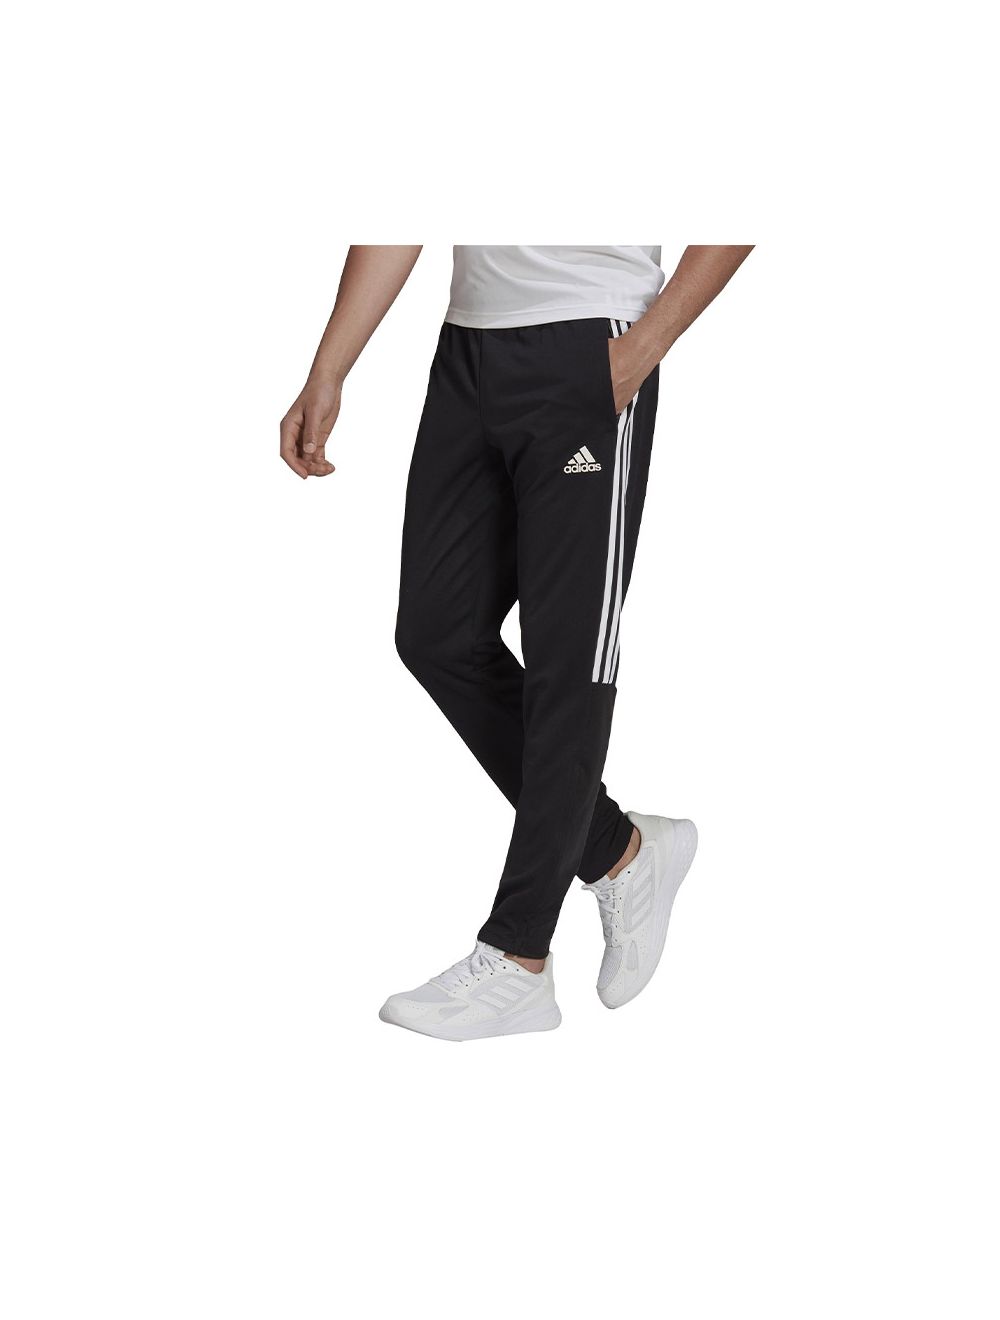 adidas Men's Essentials Track Pants, Black/Black/White, Small at Amazon  Men's Clothing store